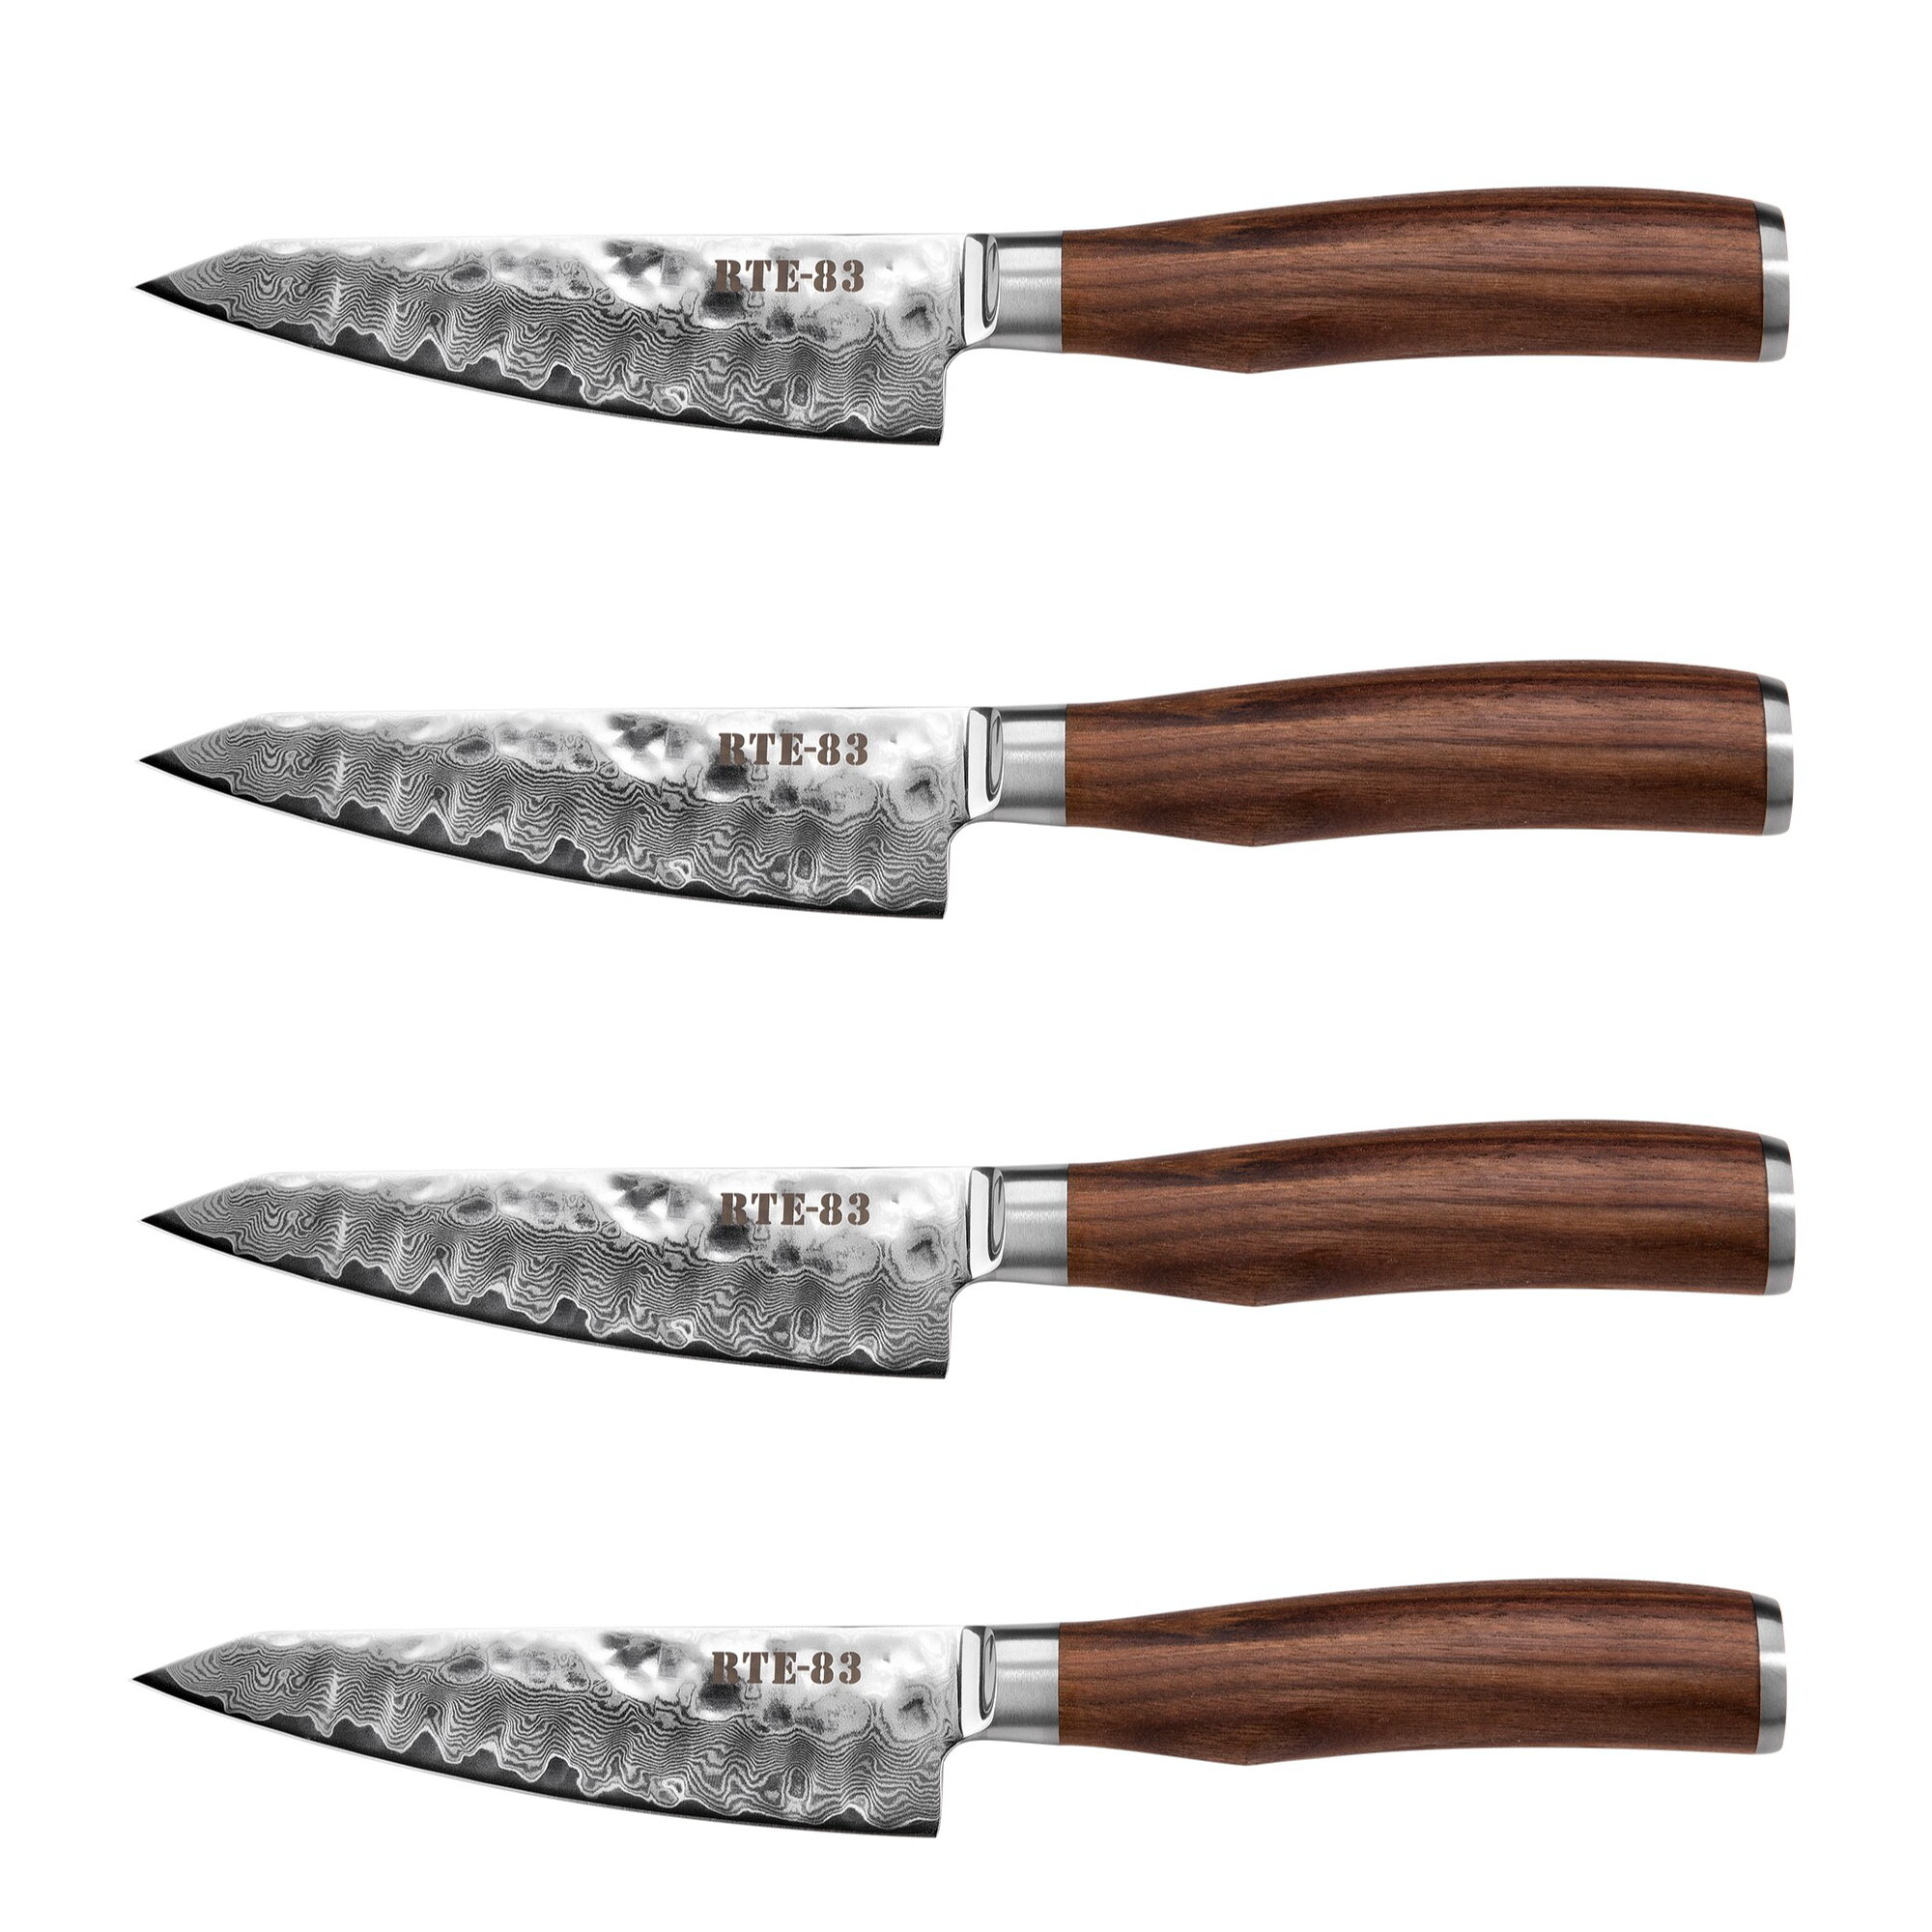 Signature The Bone Steak Knife Set of 4 — Route83 Knives